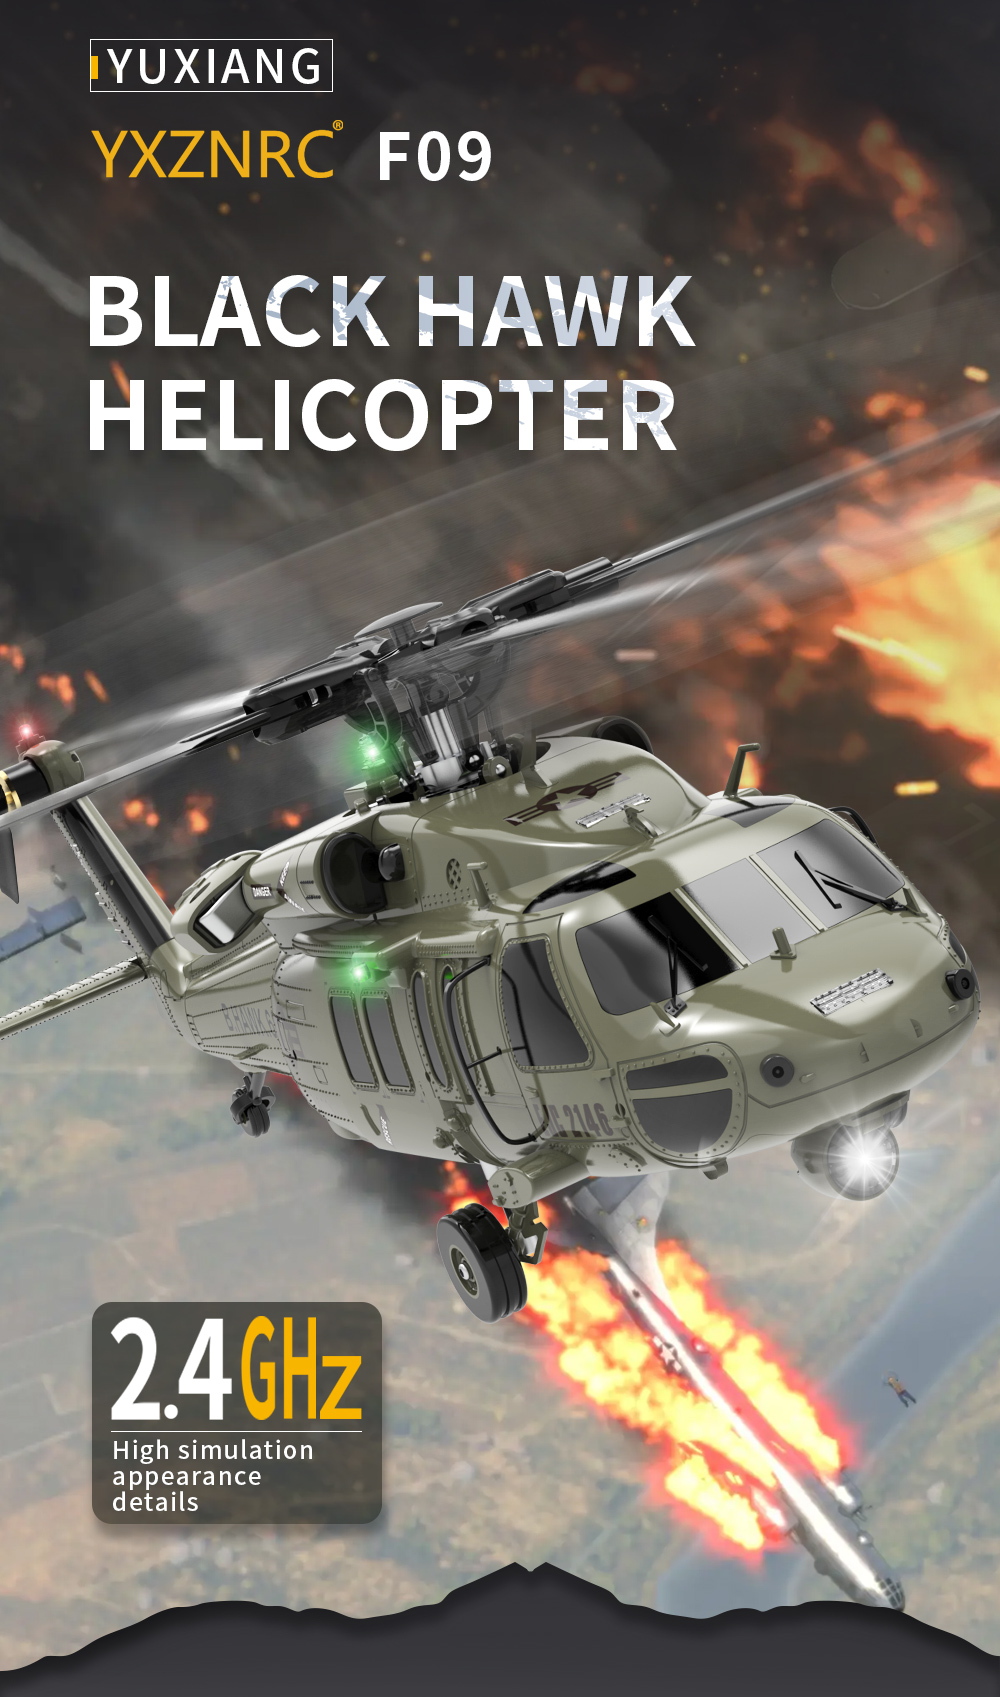 RTF UH-60 Blackhawk Realistic RC Helicopter